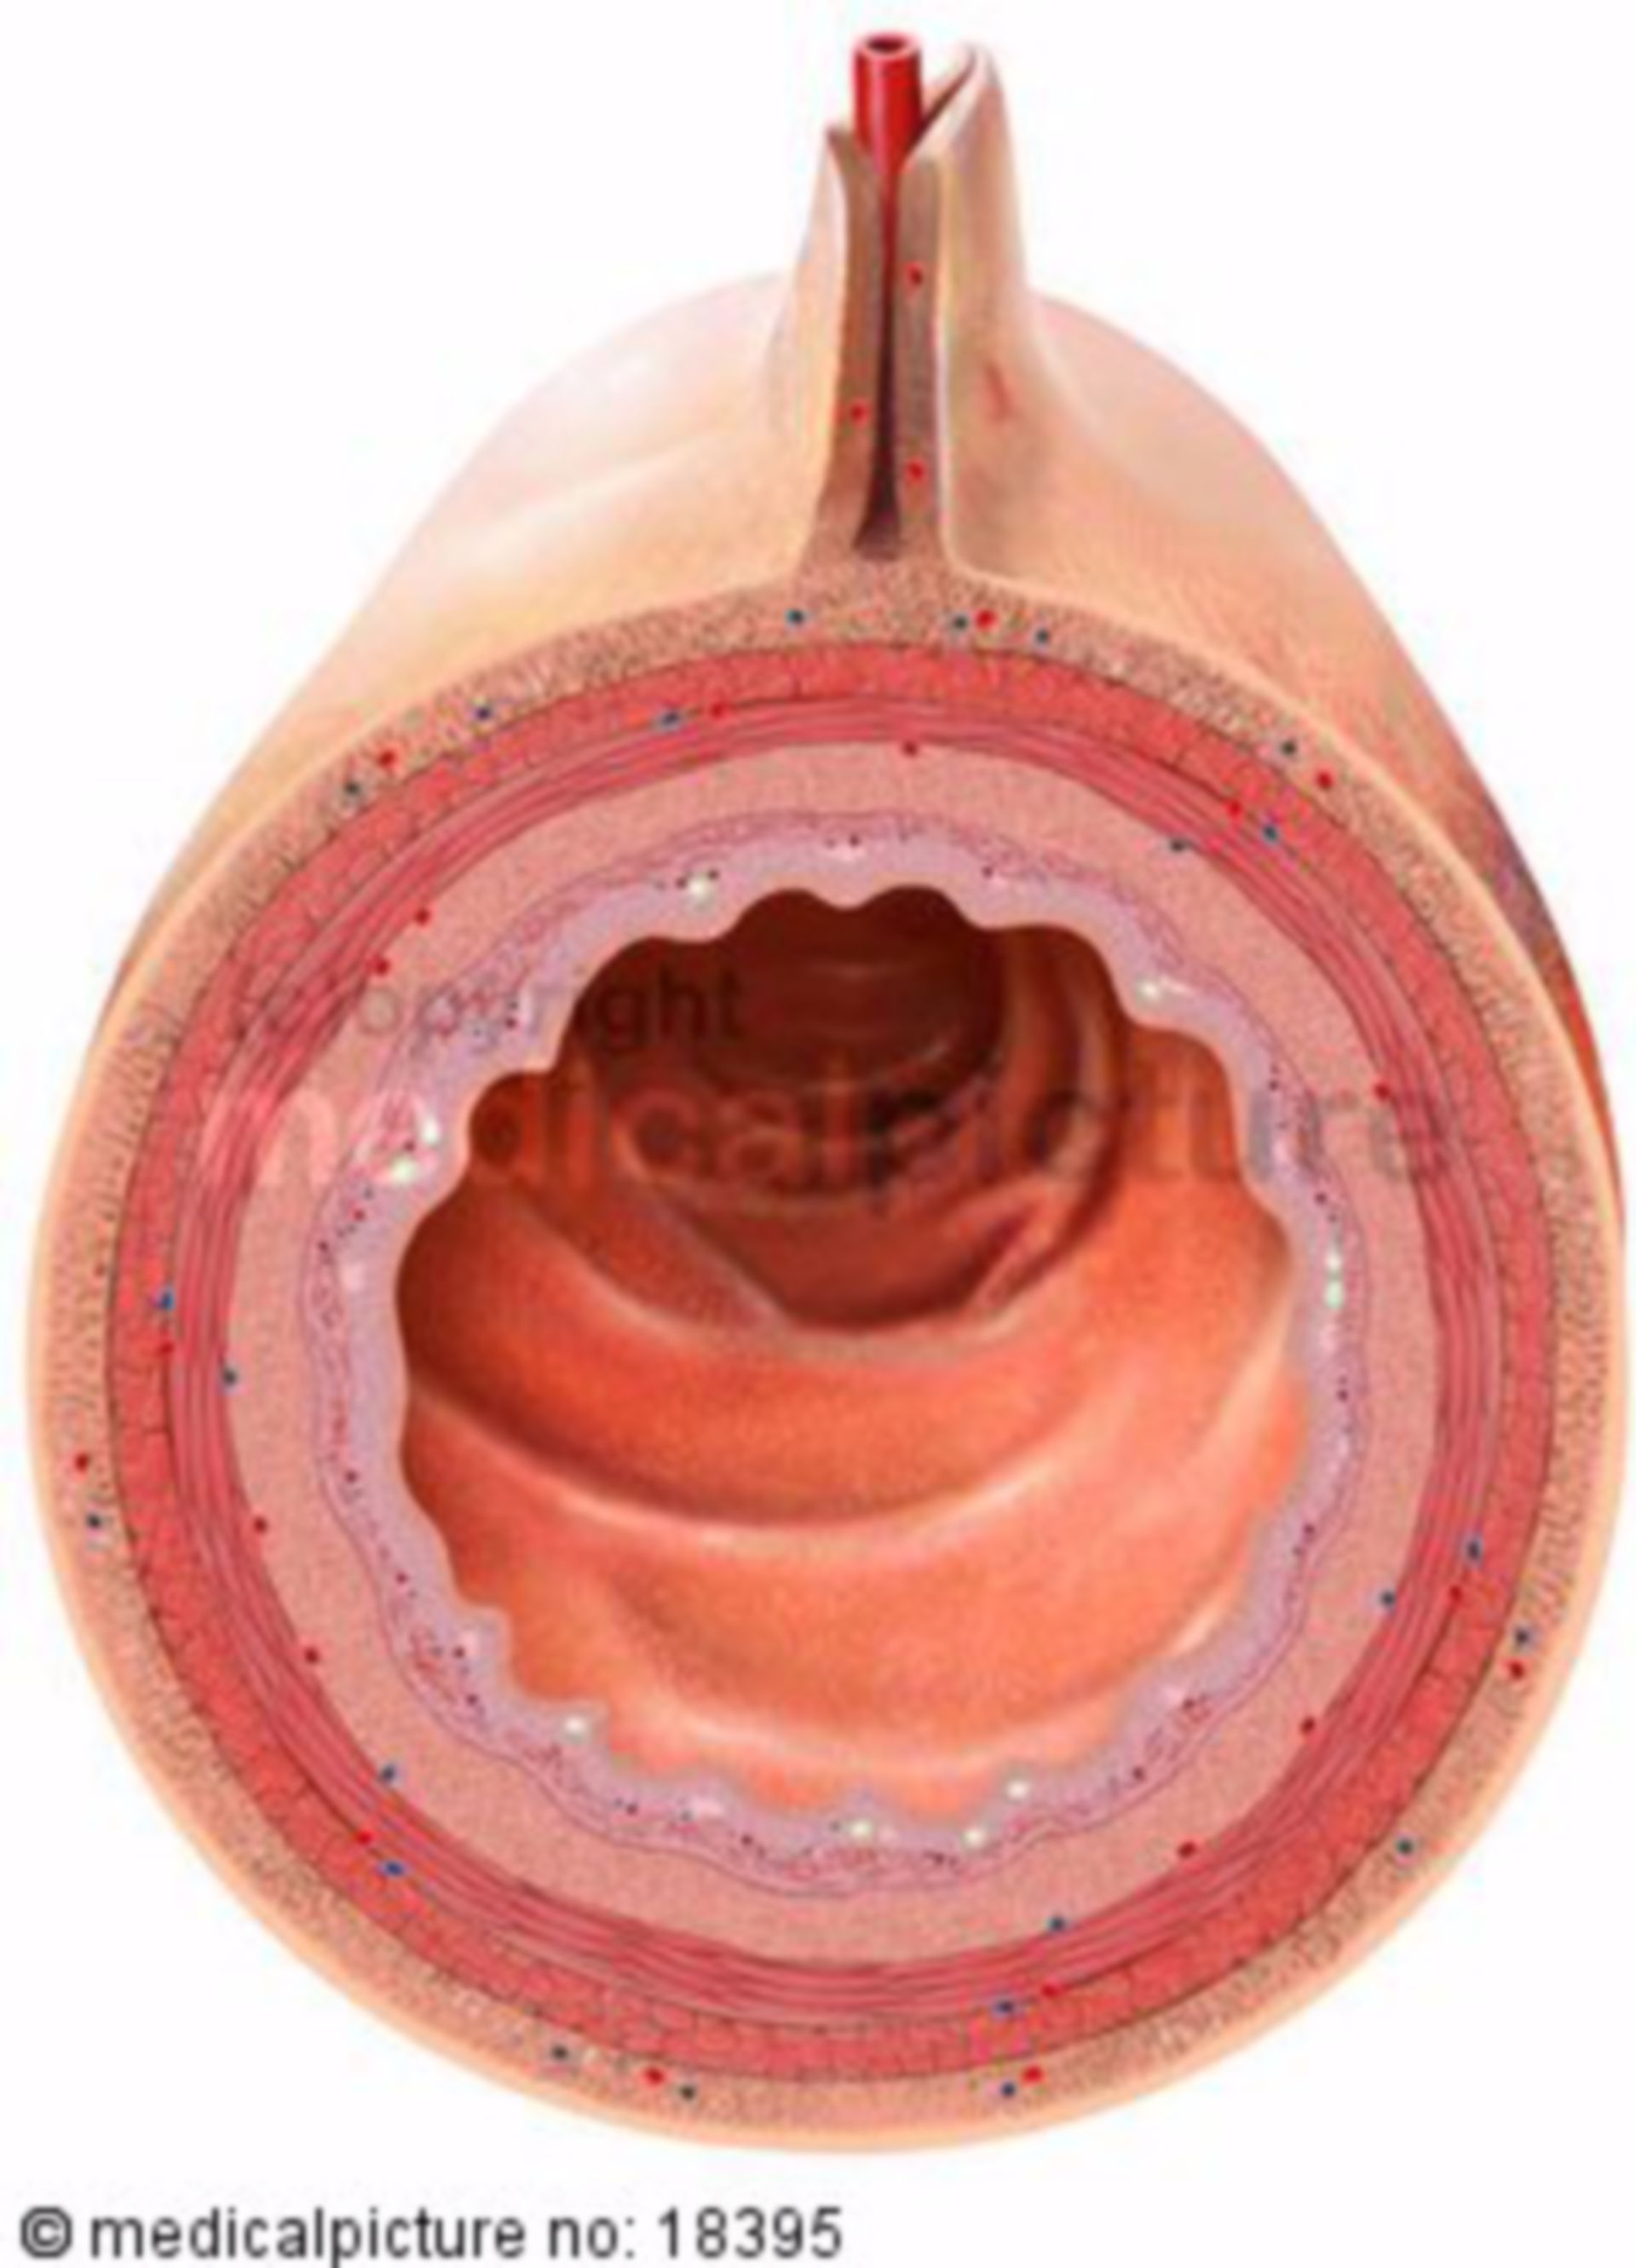 Lumen of the small intestine ileum DocCheck